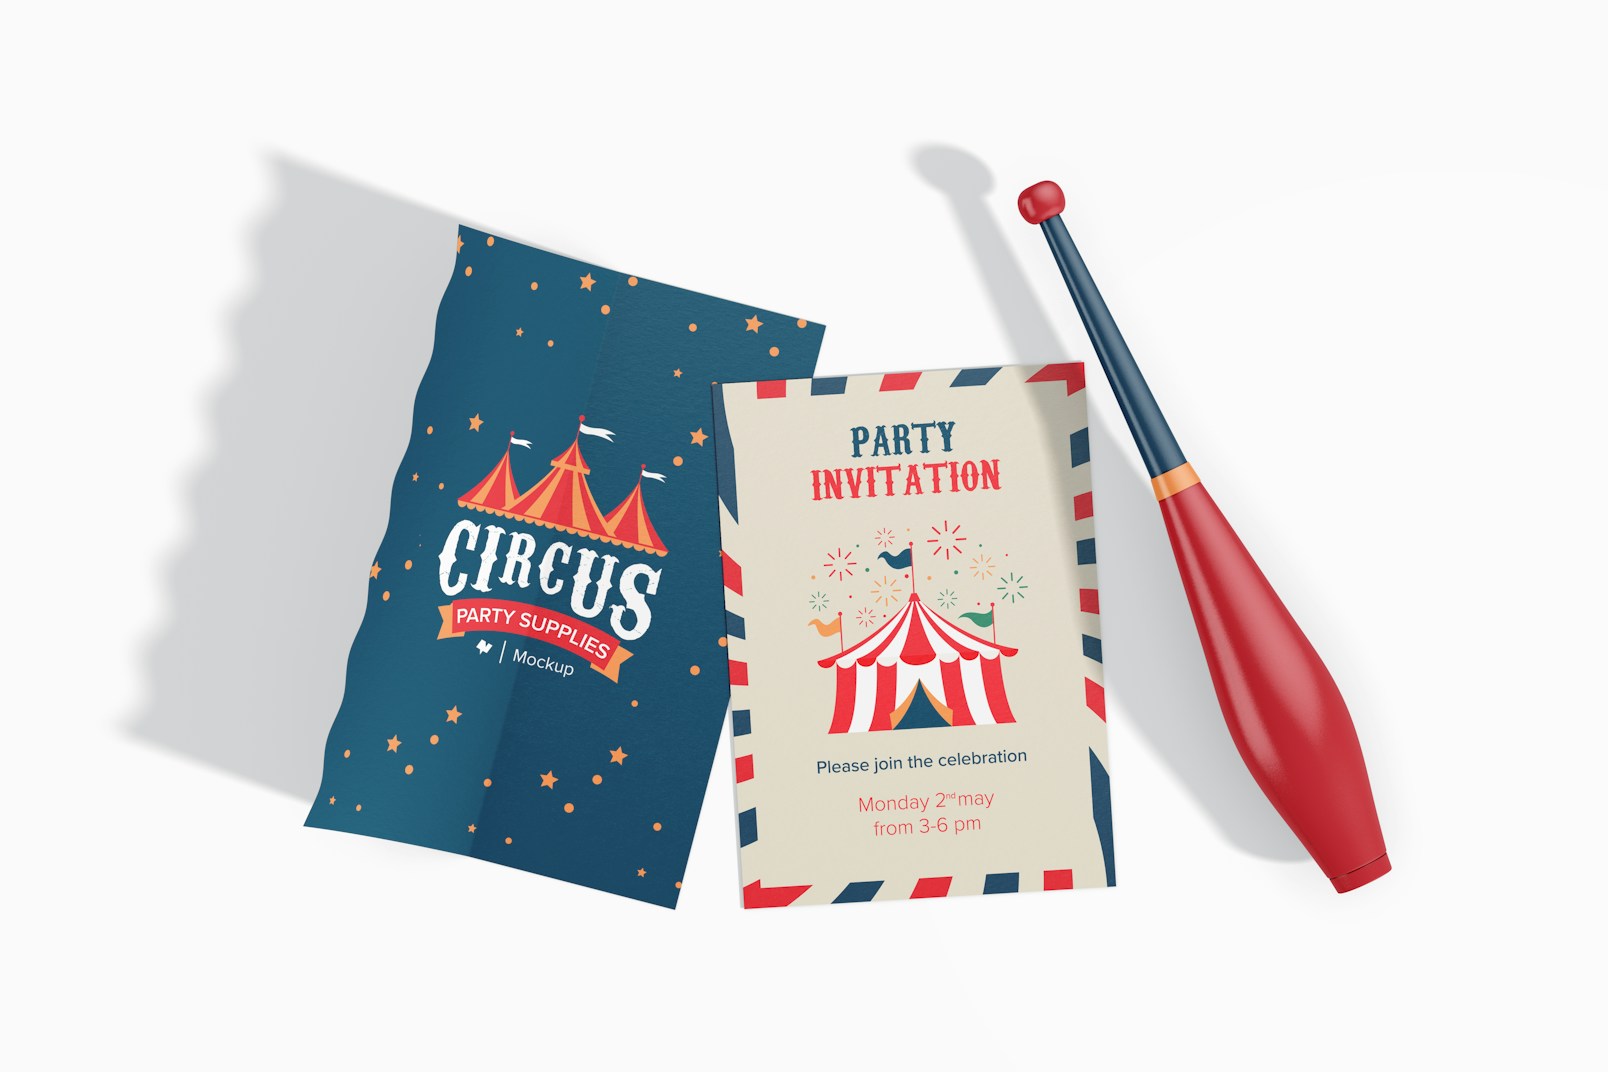 Circus Party Invitation Card Mockup, Top View